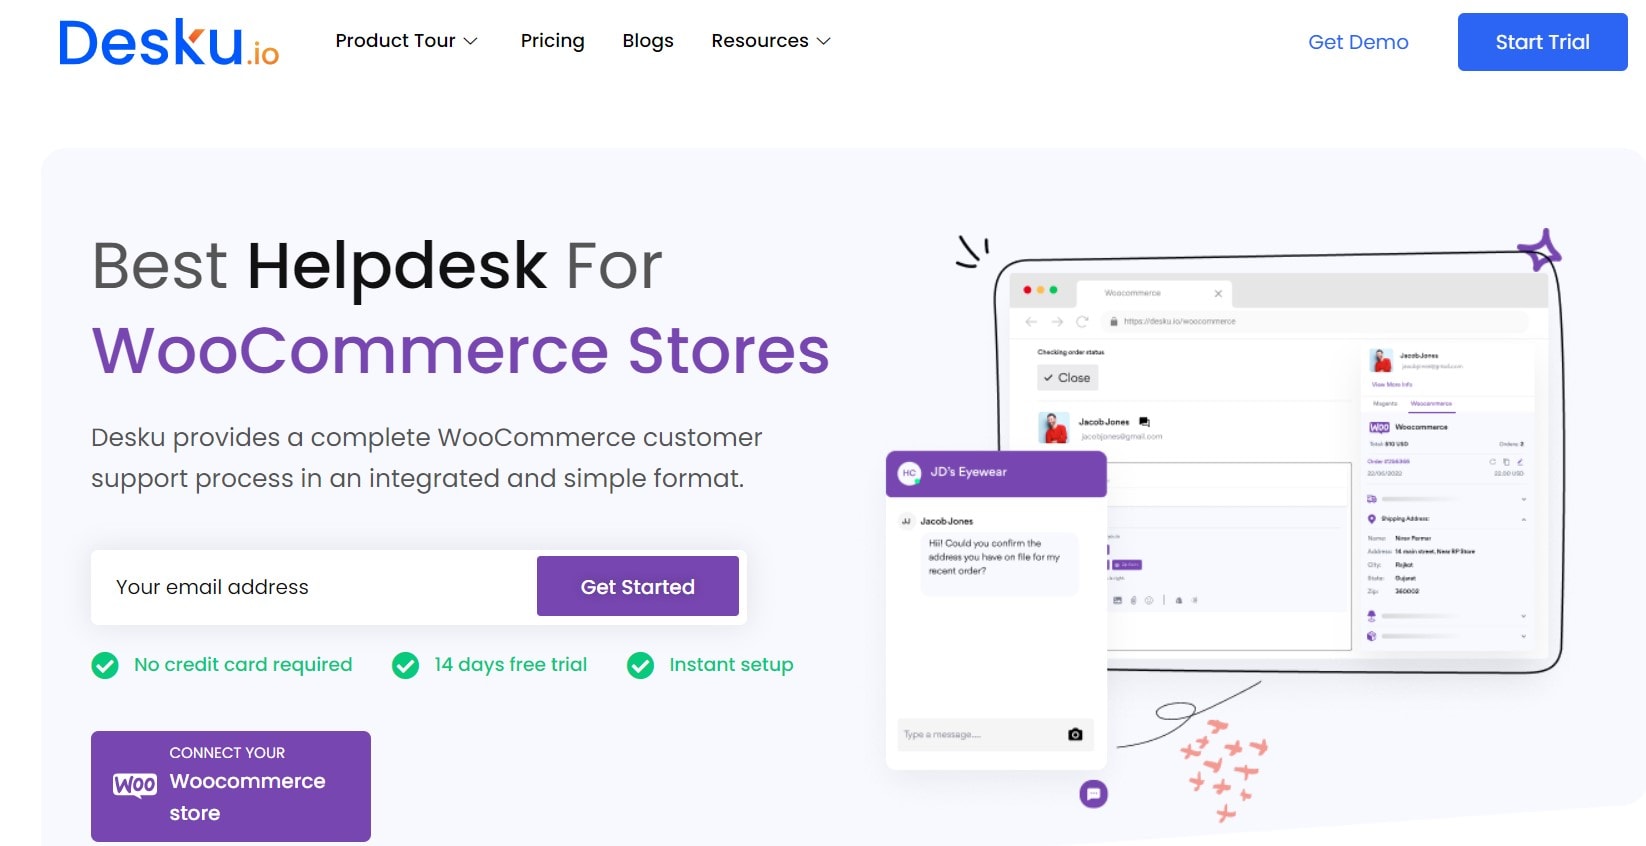 Desku.io For WooCommerce